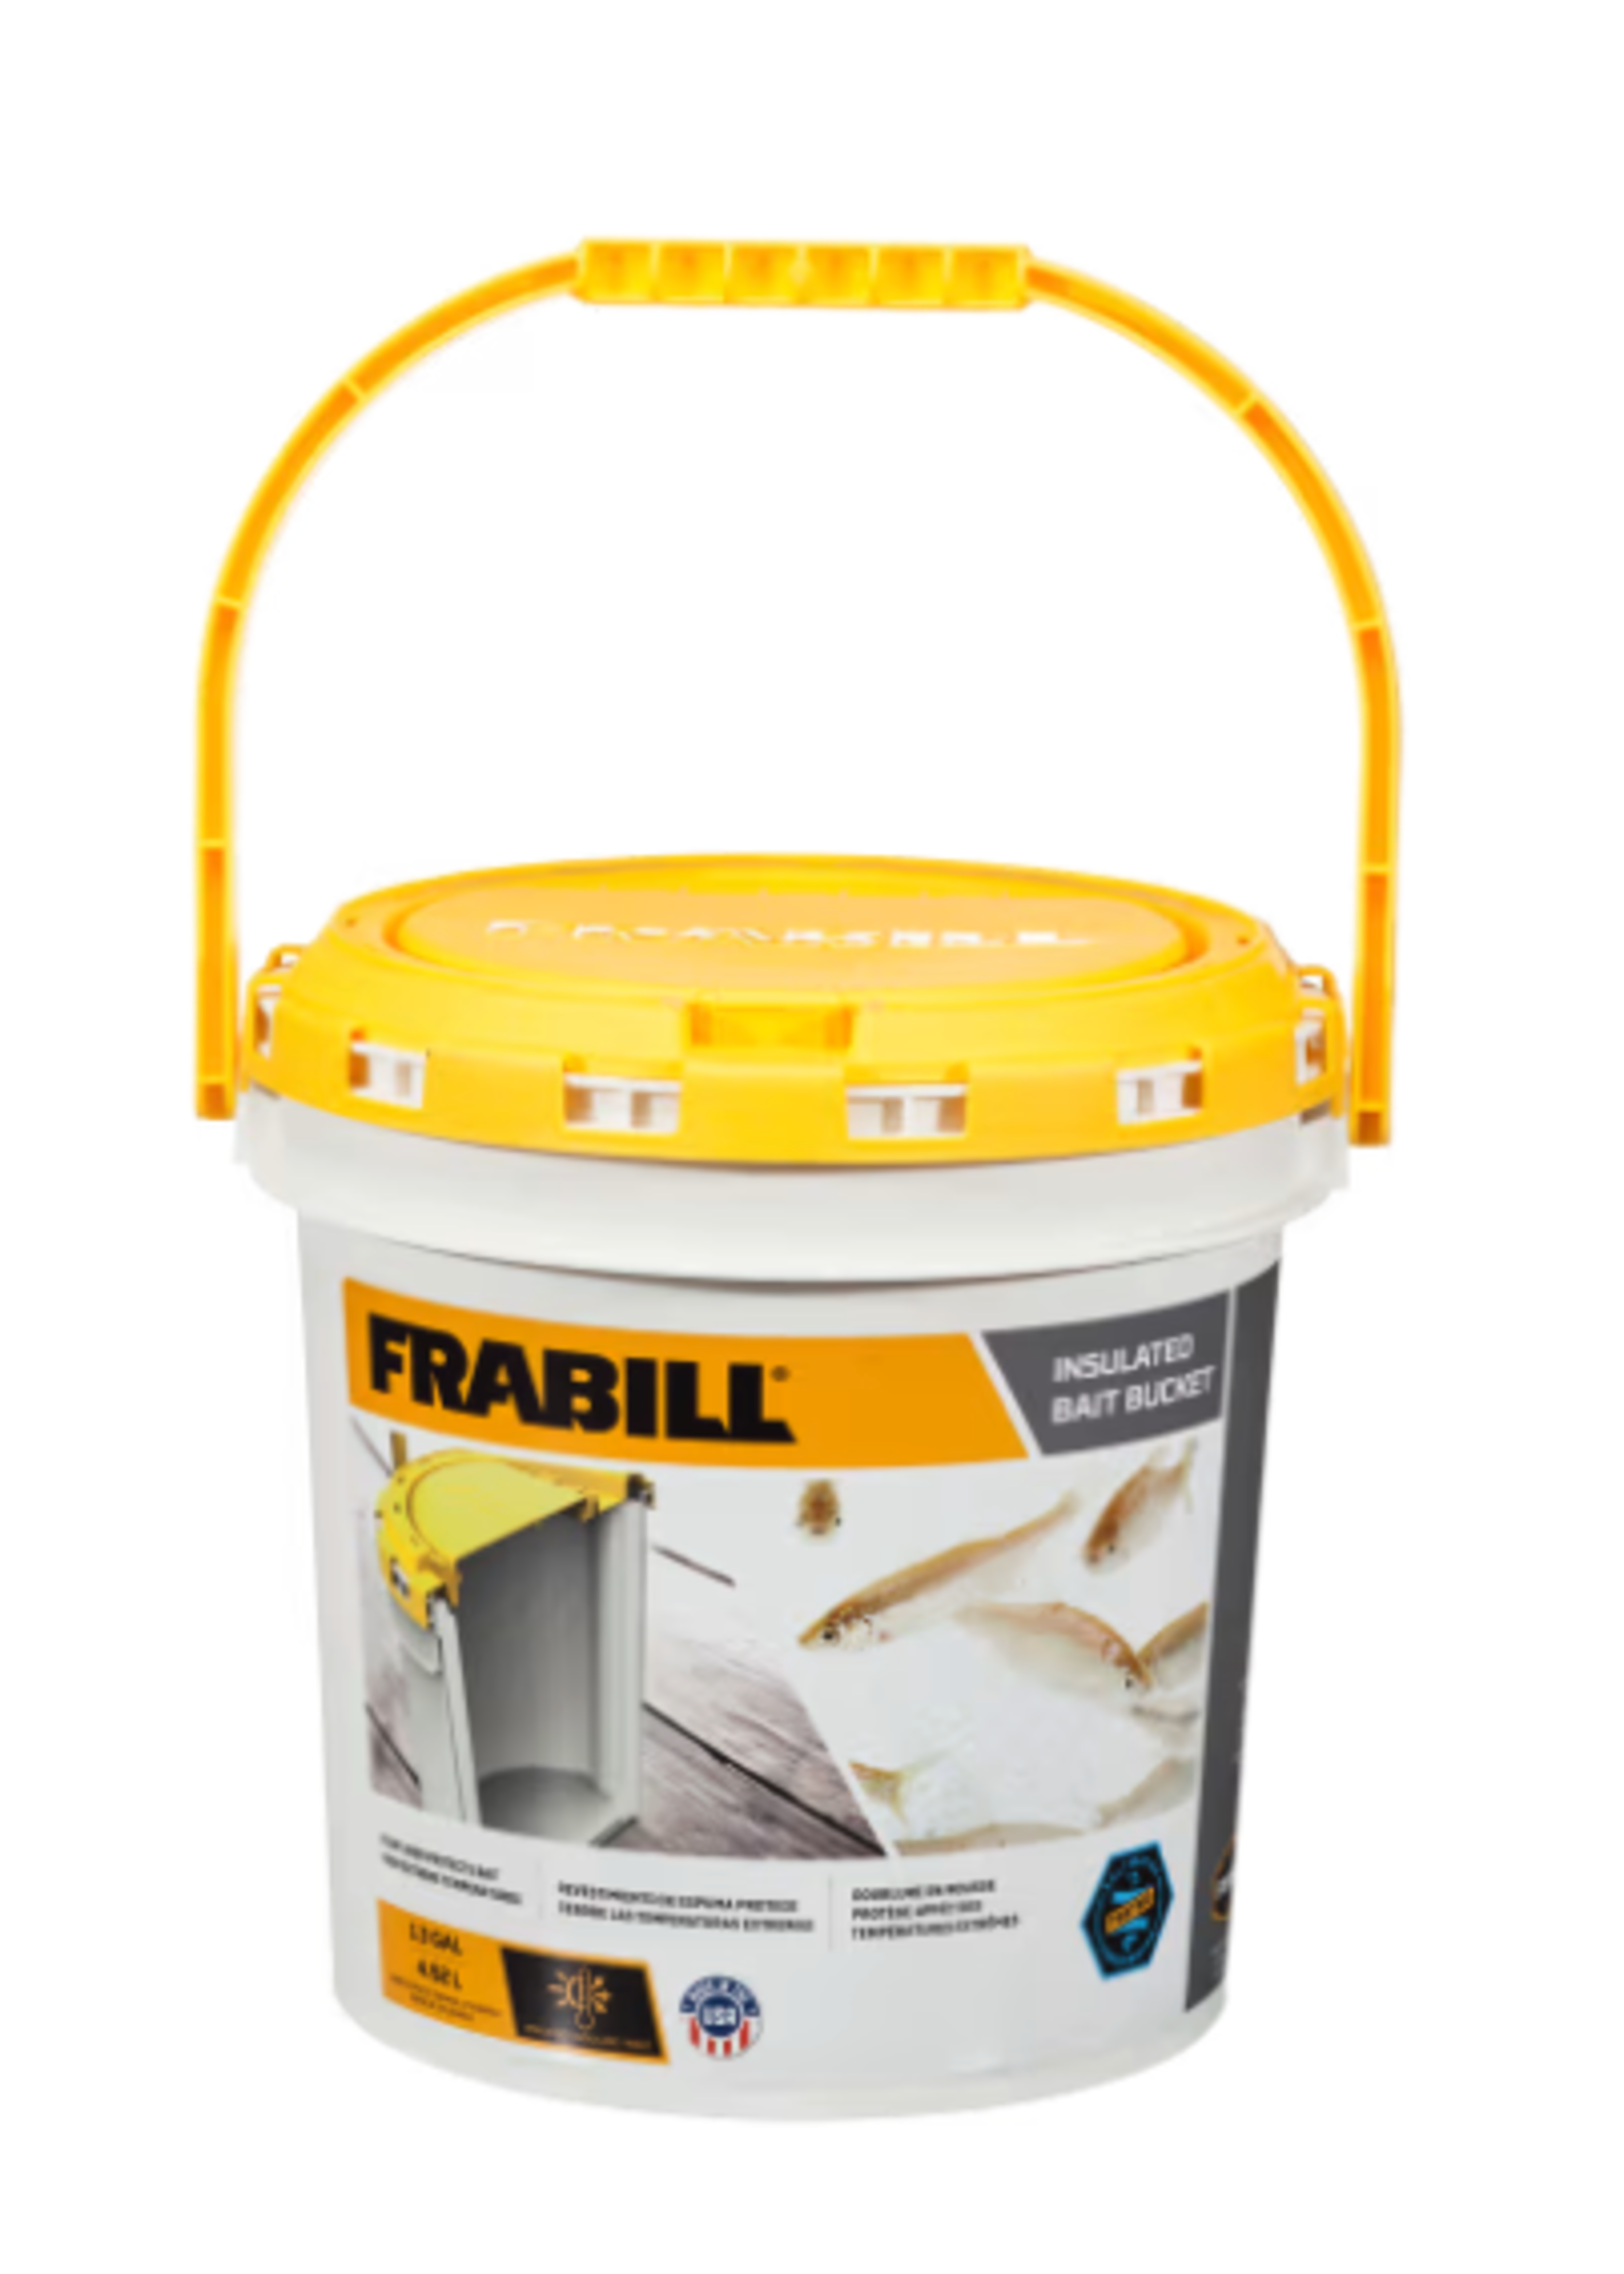 Frabill Insulated Bait Bucket 1.3 gallon